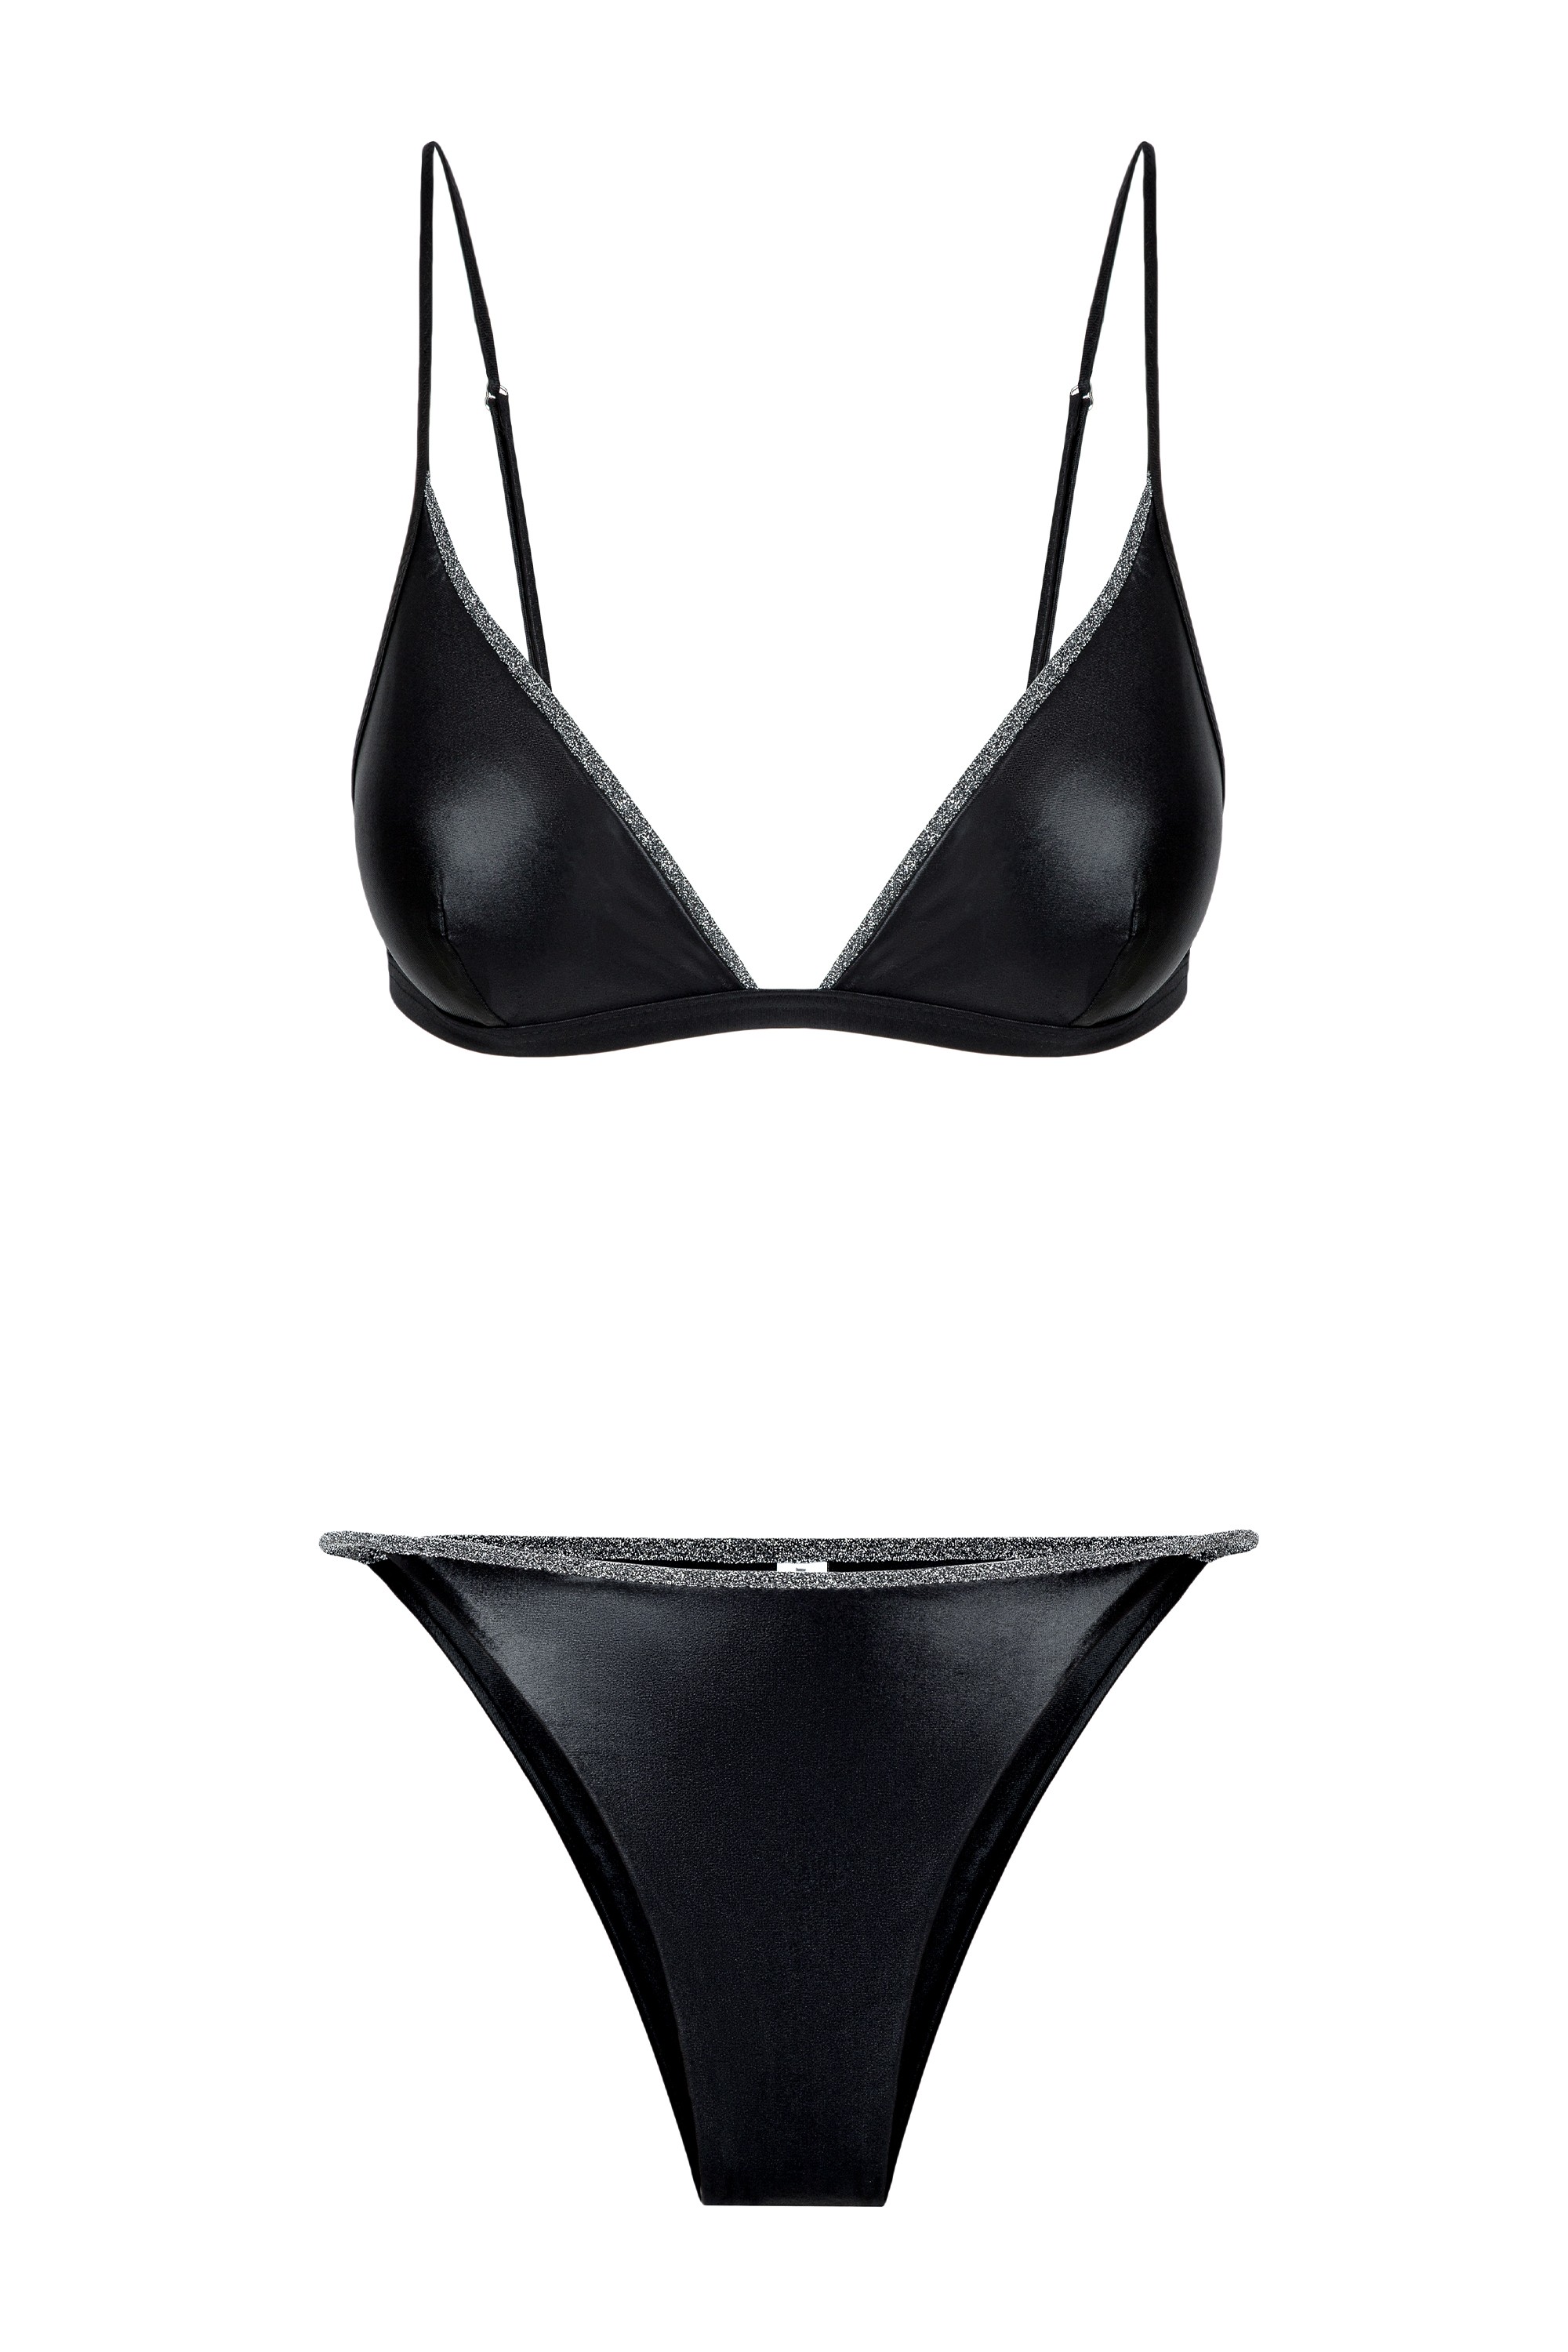    Vera two-piece swimsuit, black/silver